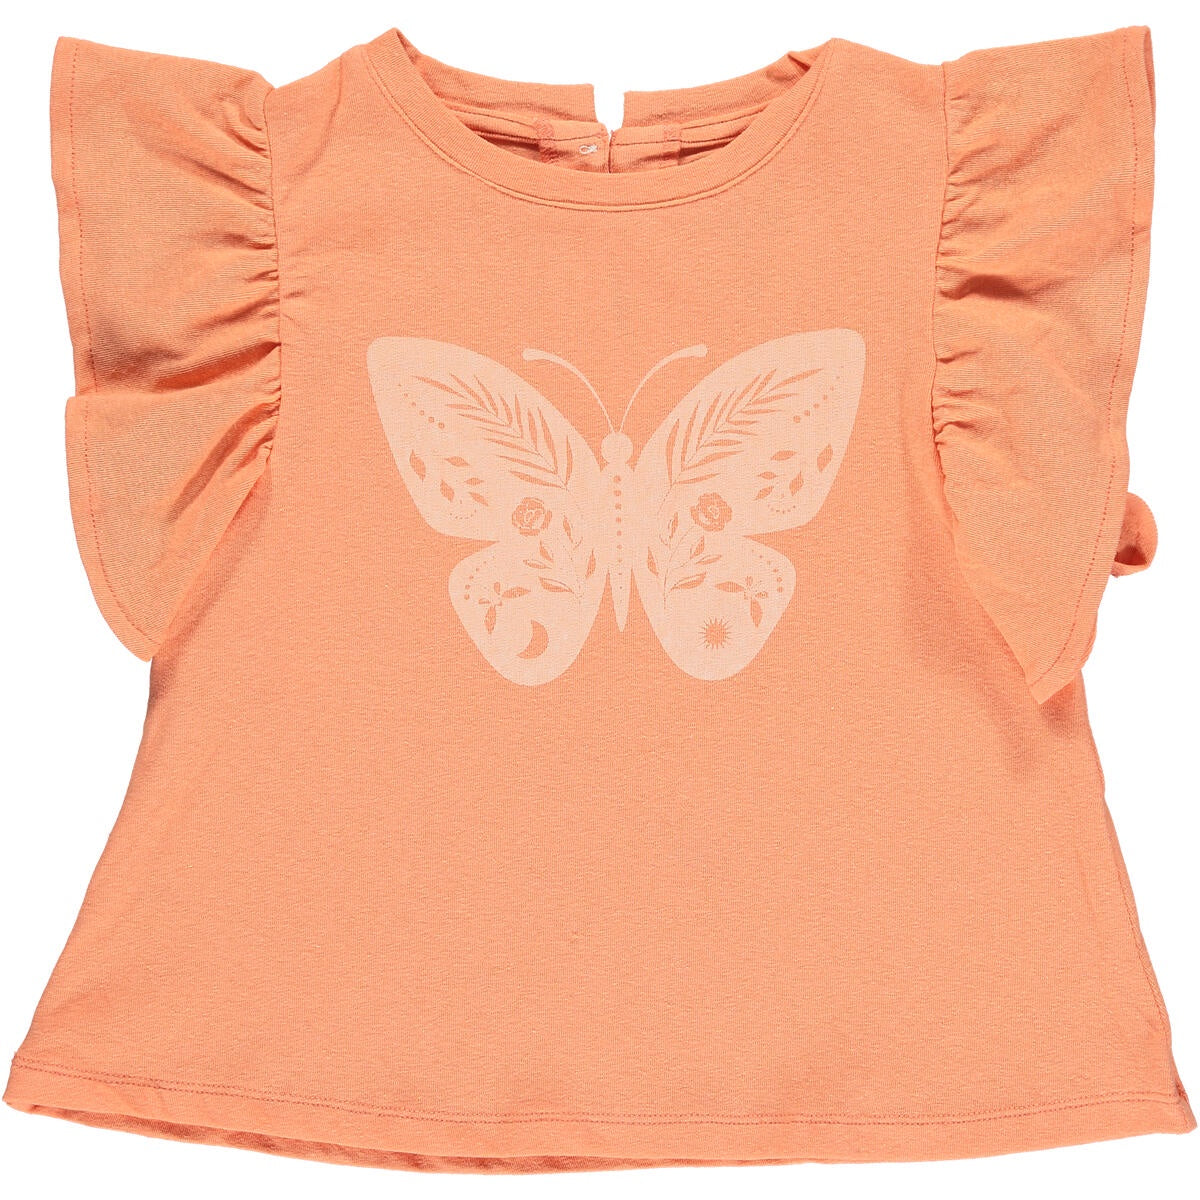 Vignette Sutton T-Shirt Block Print Butterfly V1081 5102